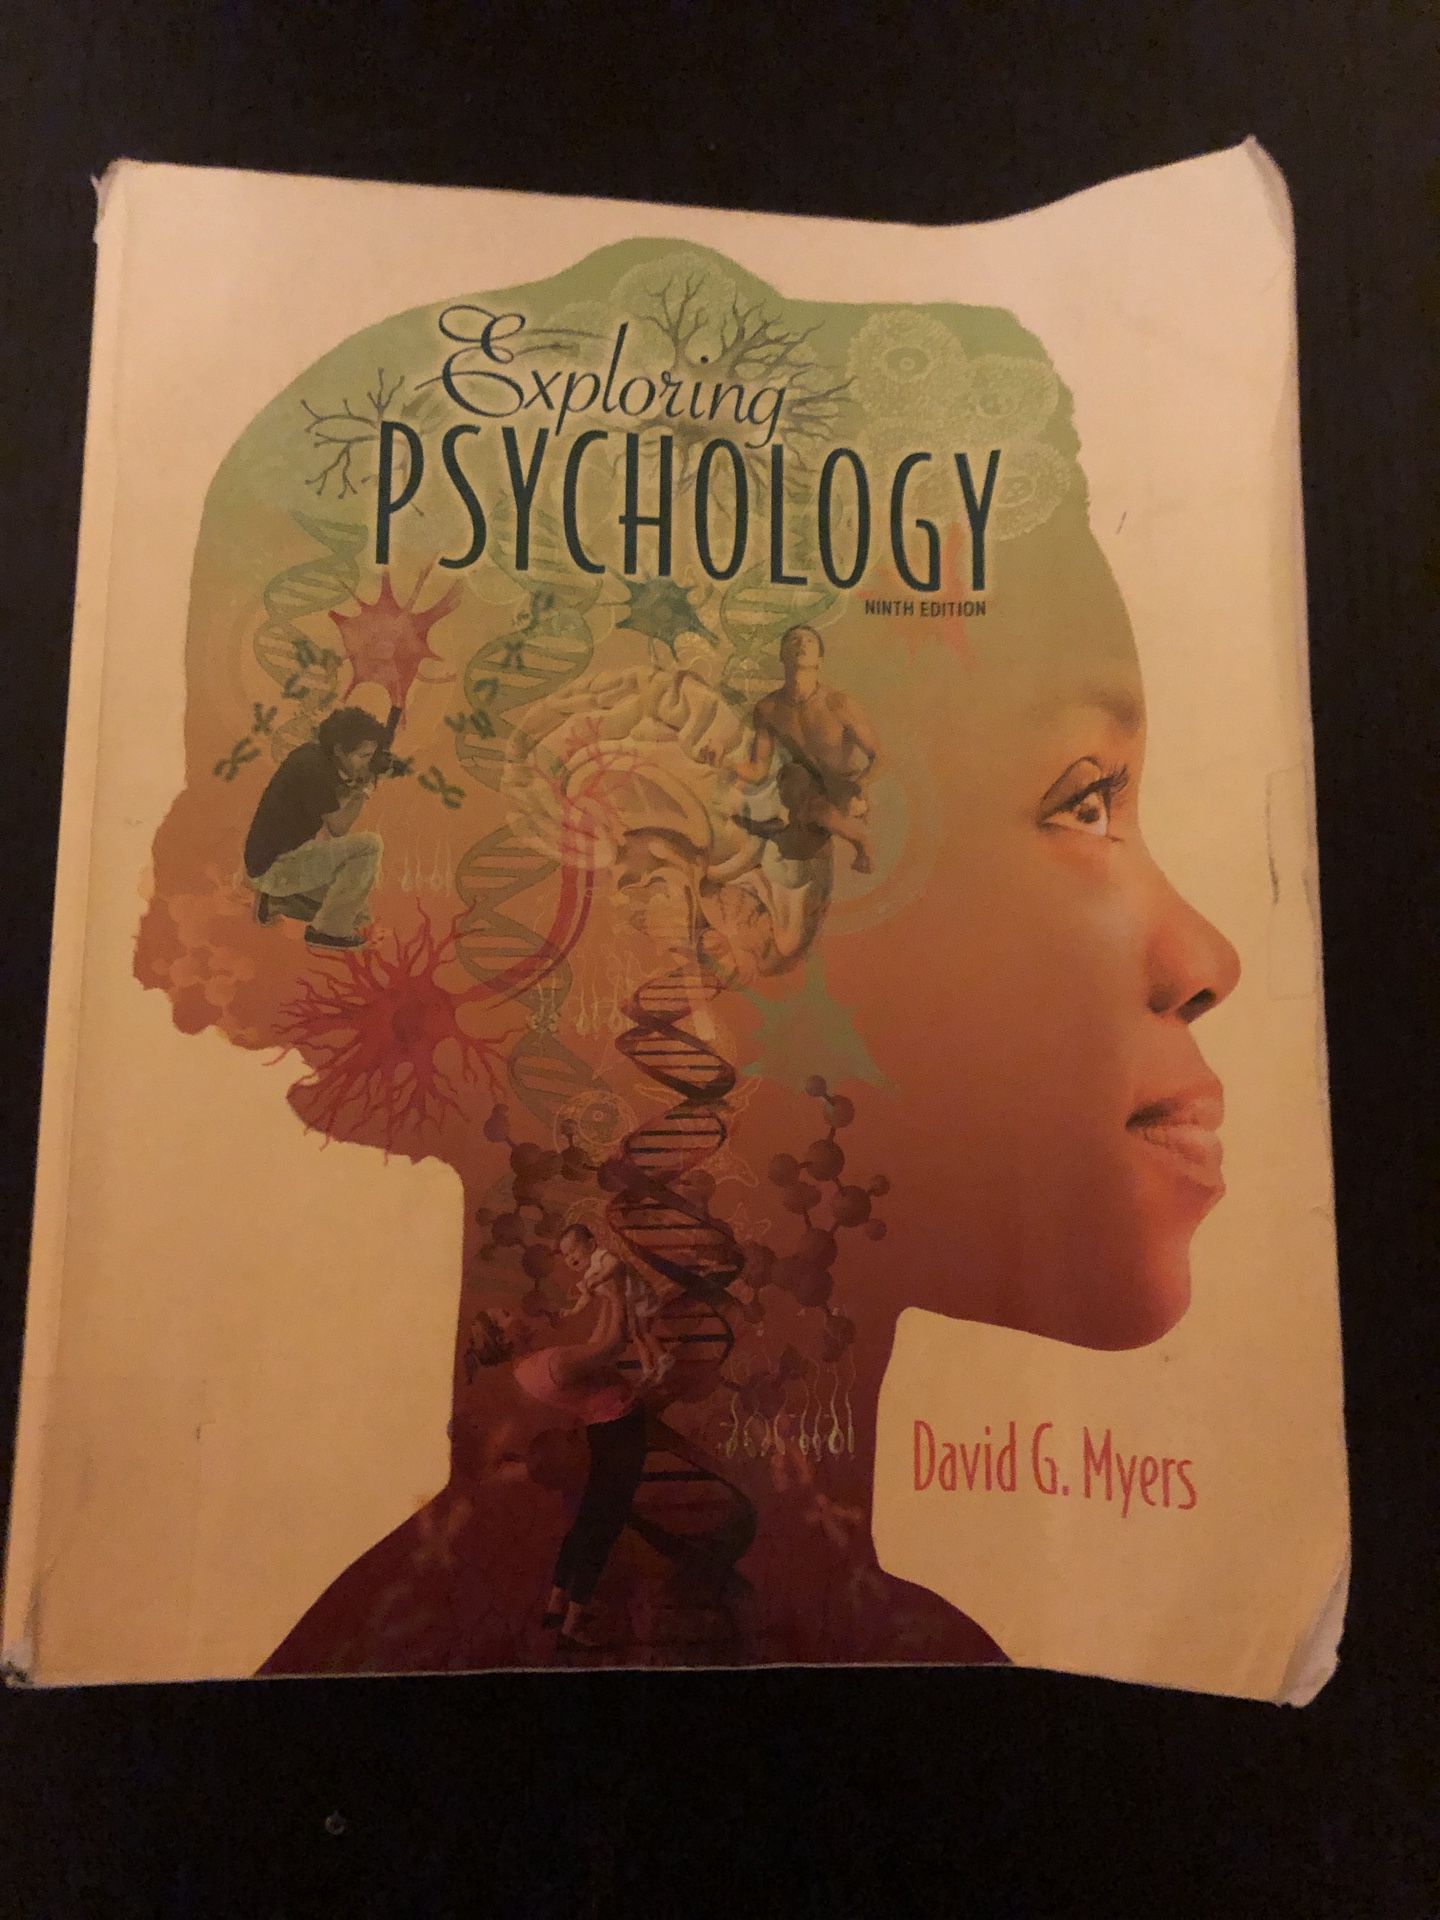 Exploring Psychology 9th Ninth Edition David G. Myers